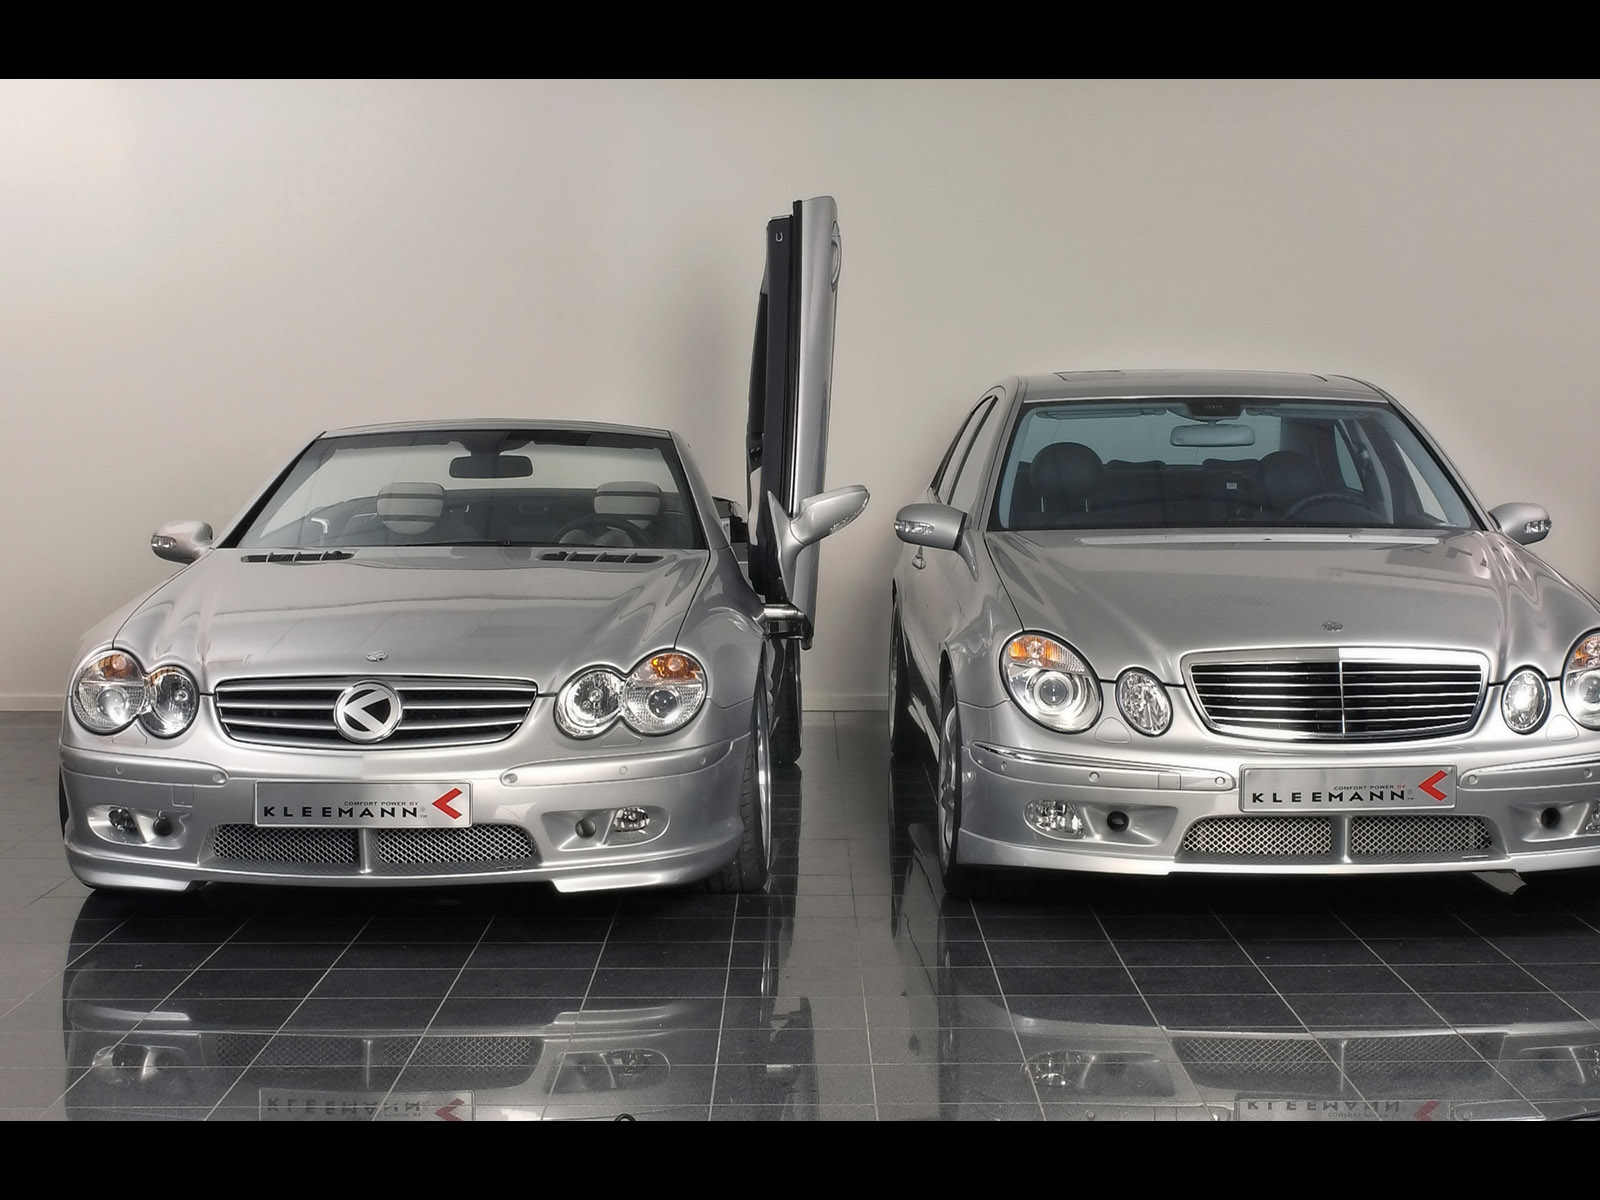 2005, Kleemann, S l, 50k, S 8, Mercedes, Benz, Tuning, Supercar, Supercars, Coupe Wallpaper